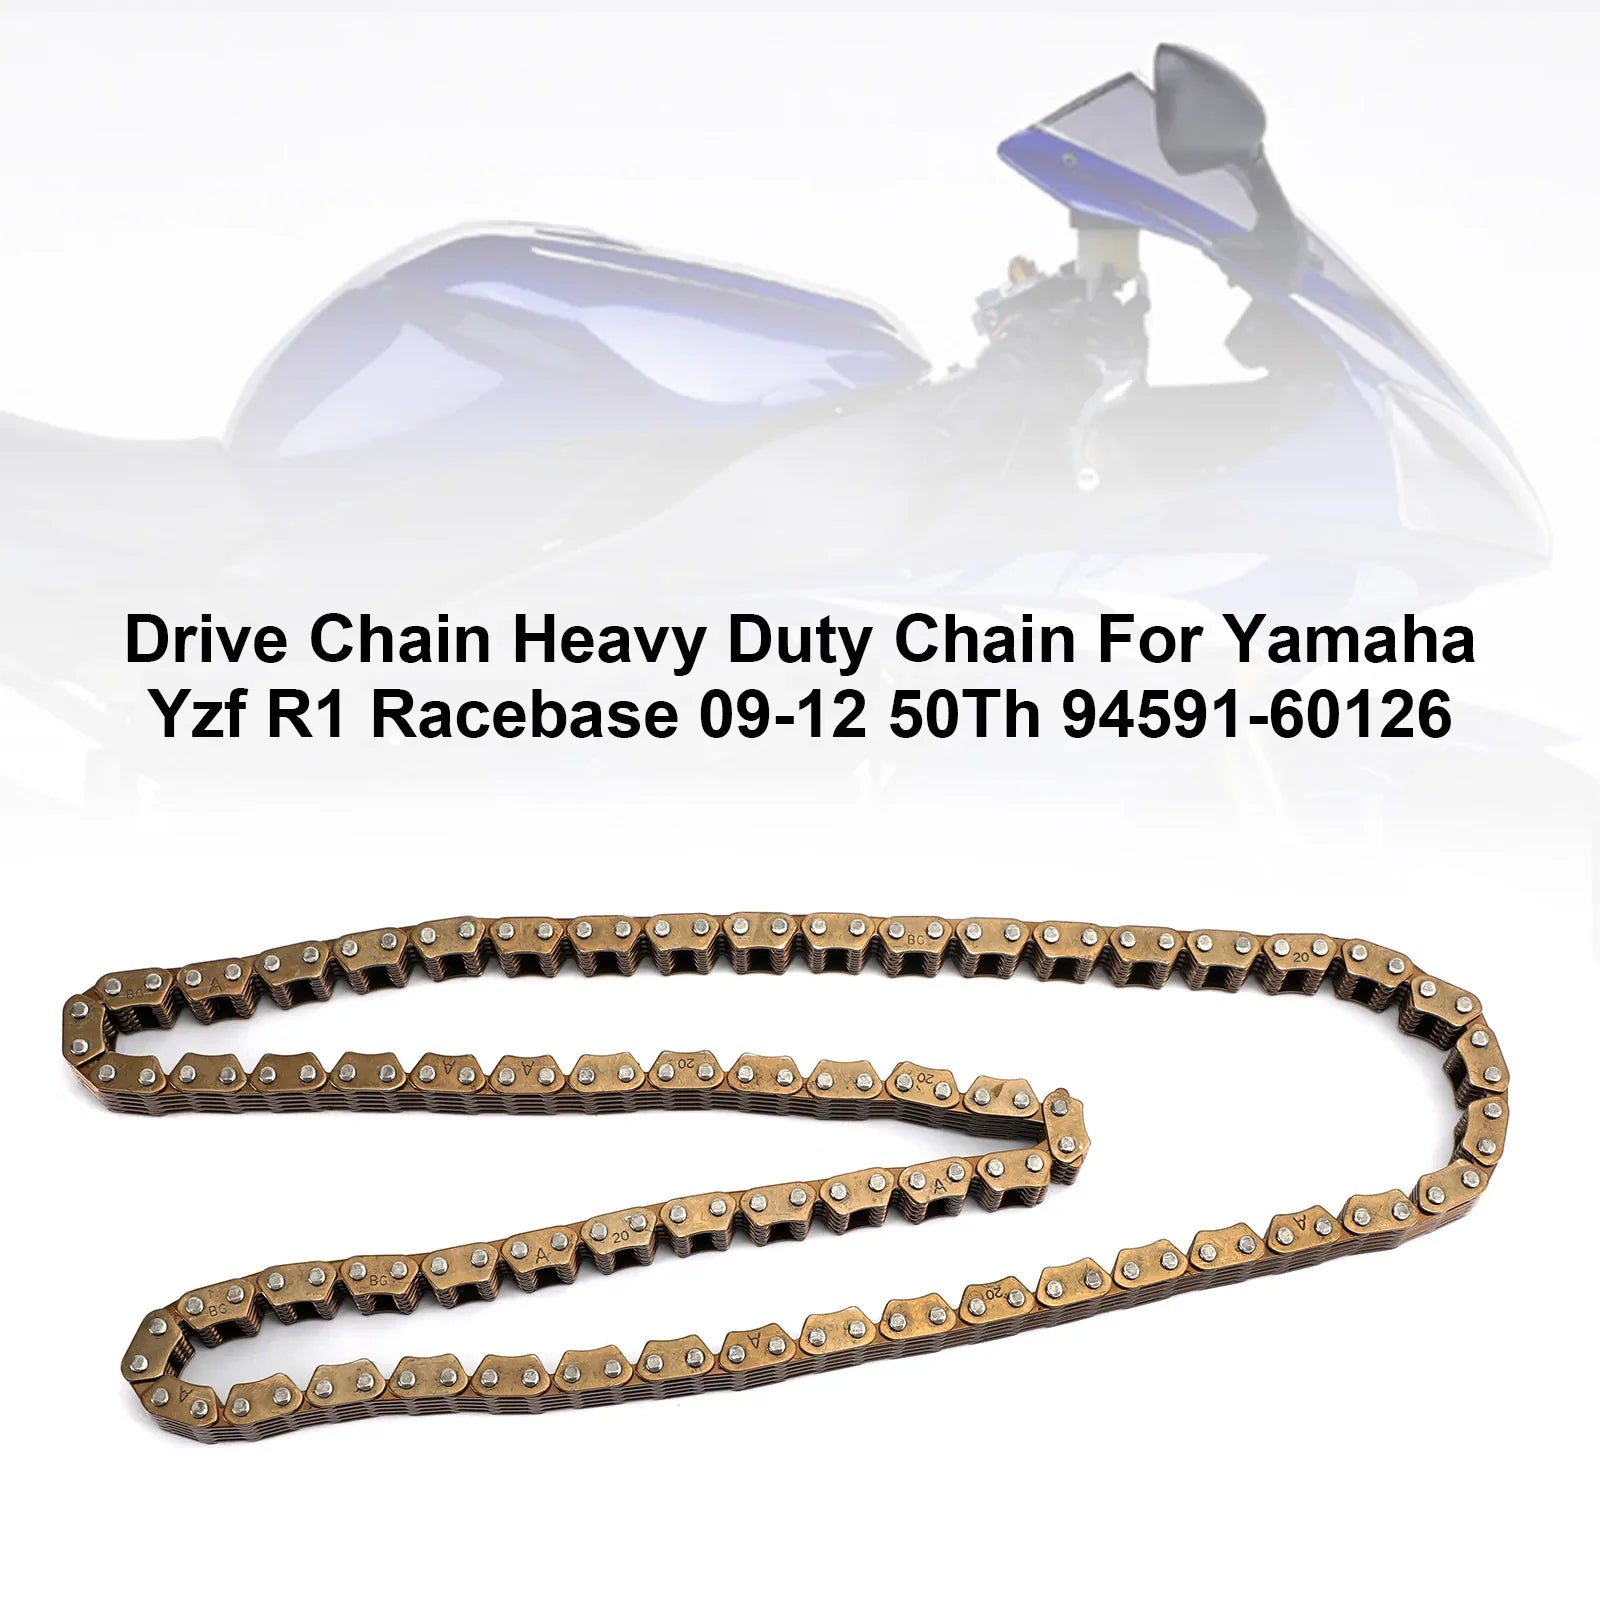 2009-2012 Yamaha Yzf R1 Racebase 50Th 94591-60126 Catena di distribuzione per impieghi gravosi